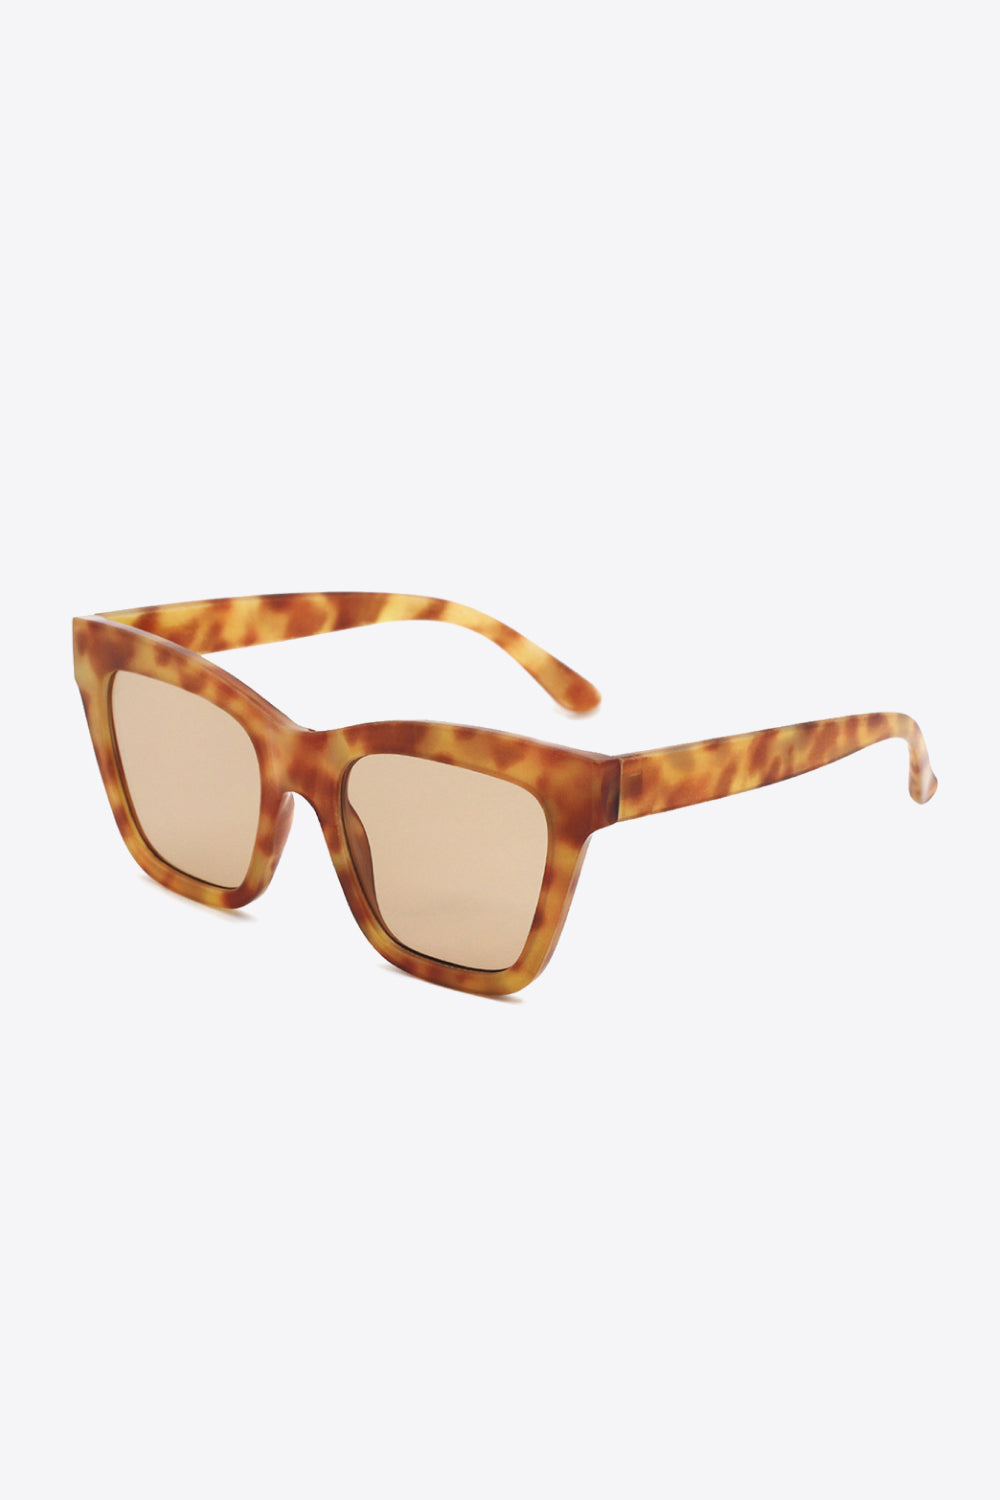 Acetate Lens UV400 Sunglasses - Caramel / One Size Girl Code